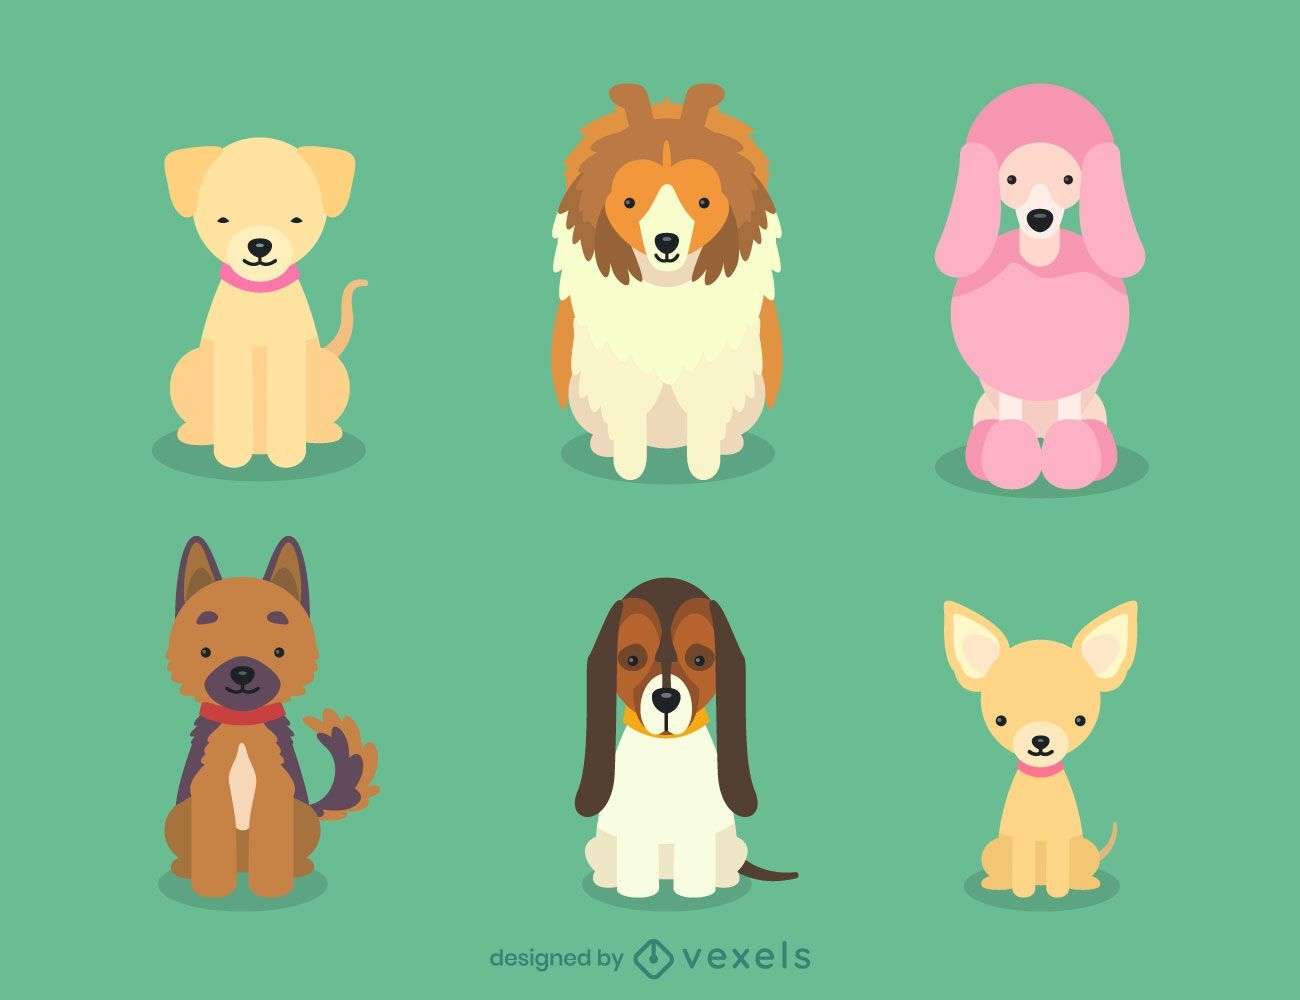 Dog breeds puppies illustration set